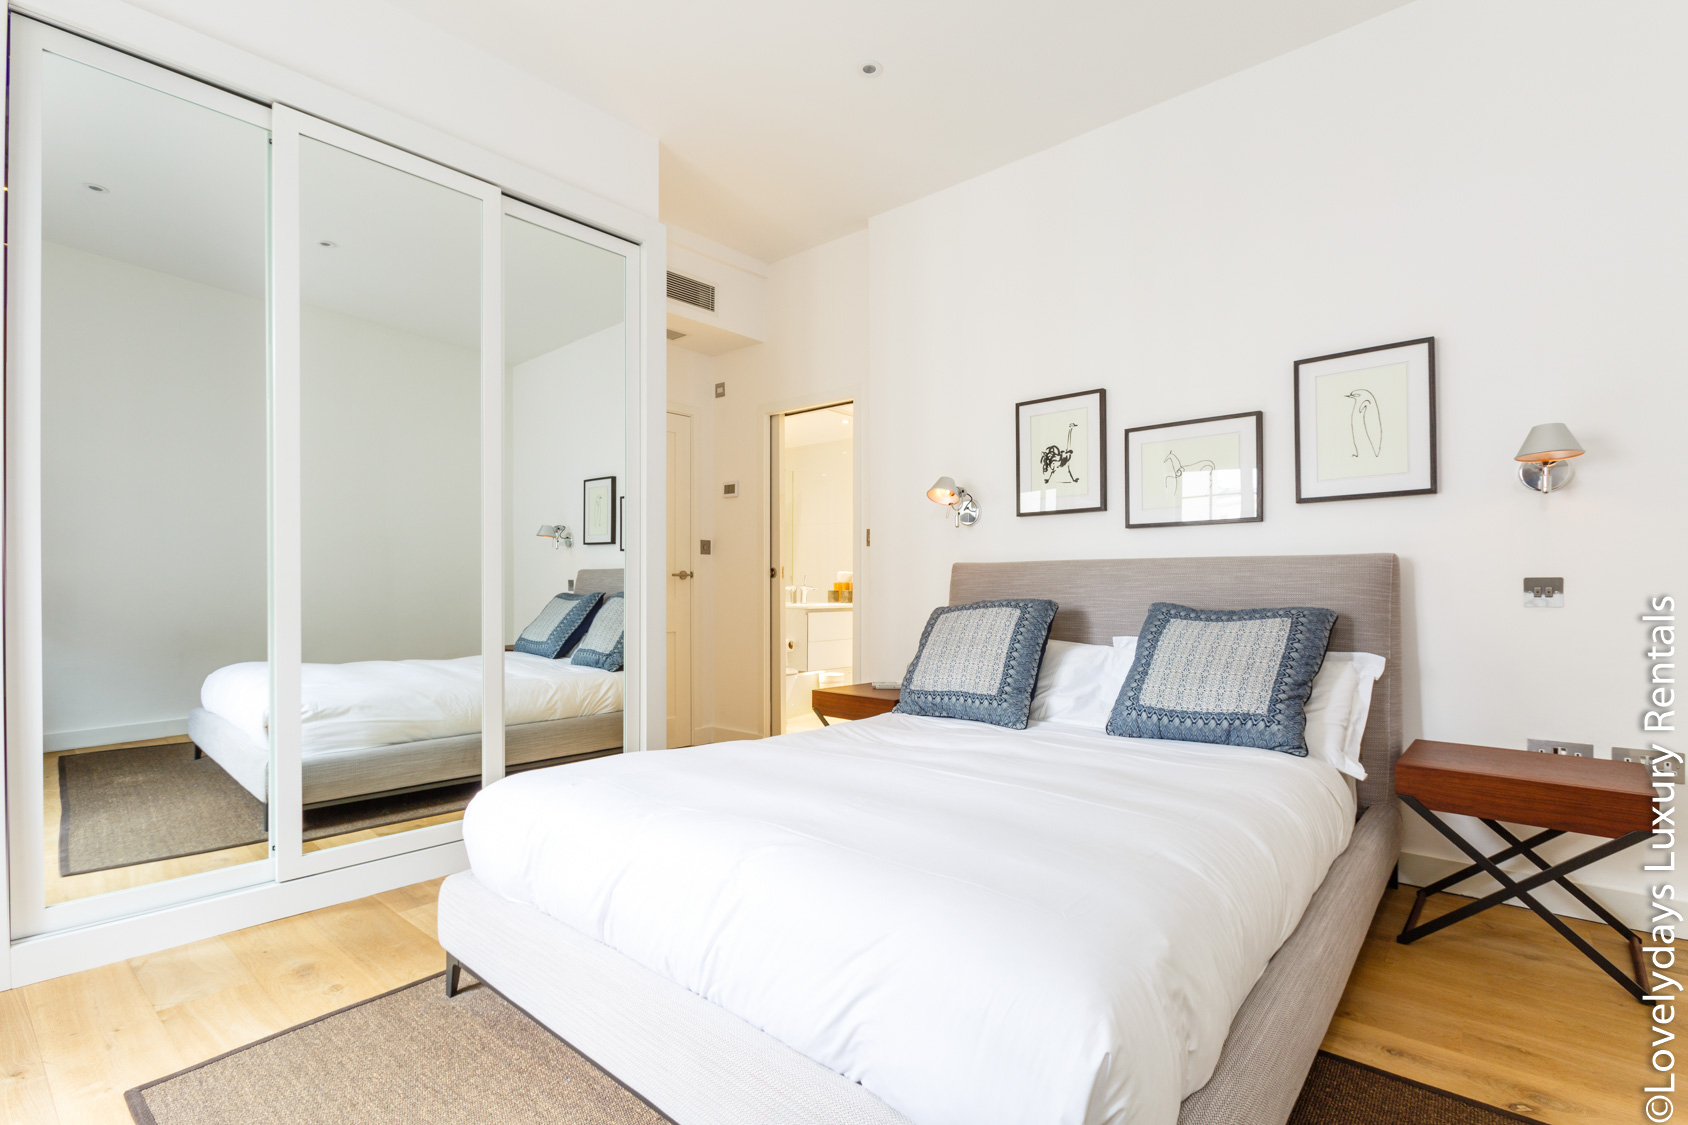 Lovelydays luxury service apartment rental - Covent Garden - Cockspur Street - Lovelysuite - 3 bedrooms - 2 bathrooms - Double bed - a2809dcfbfd2 - Lovelydays